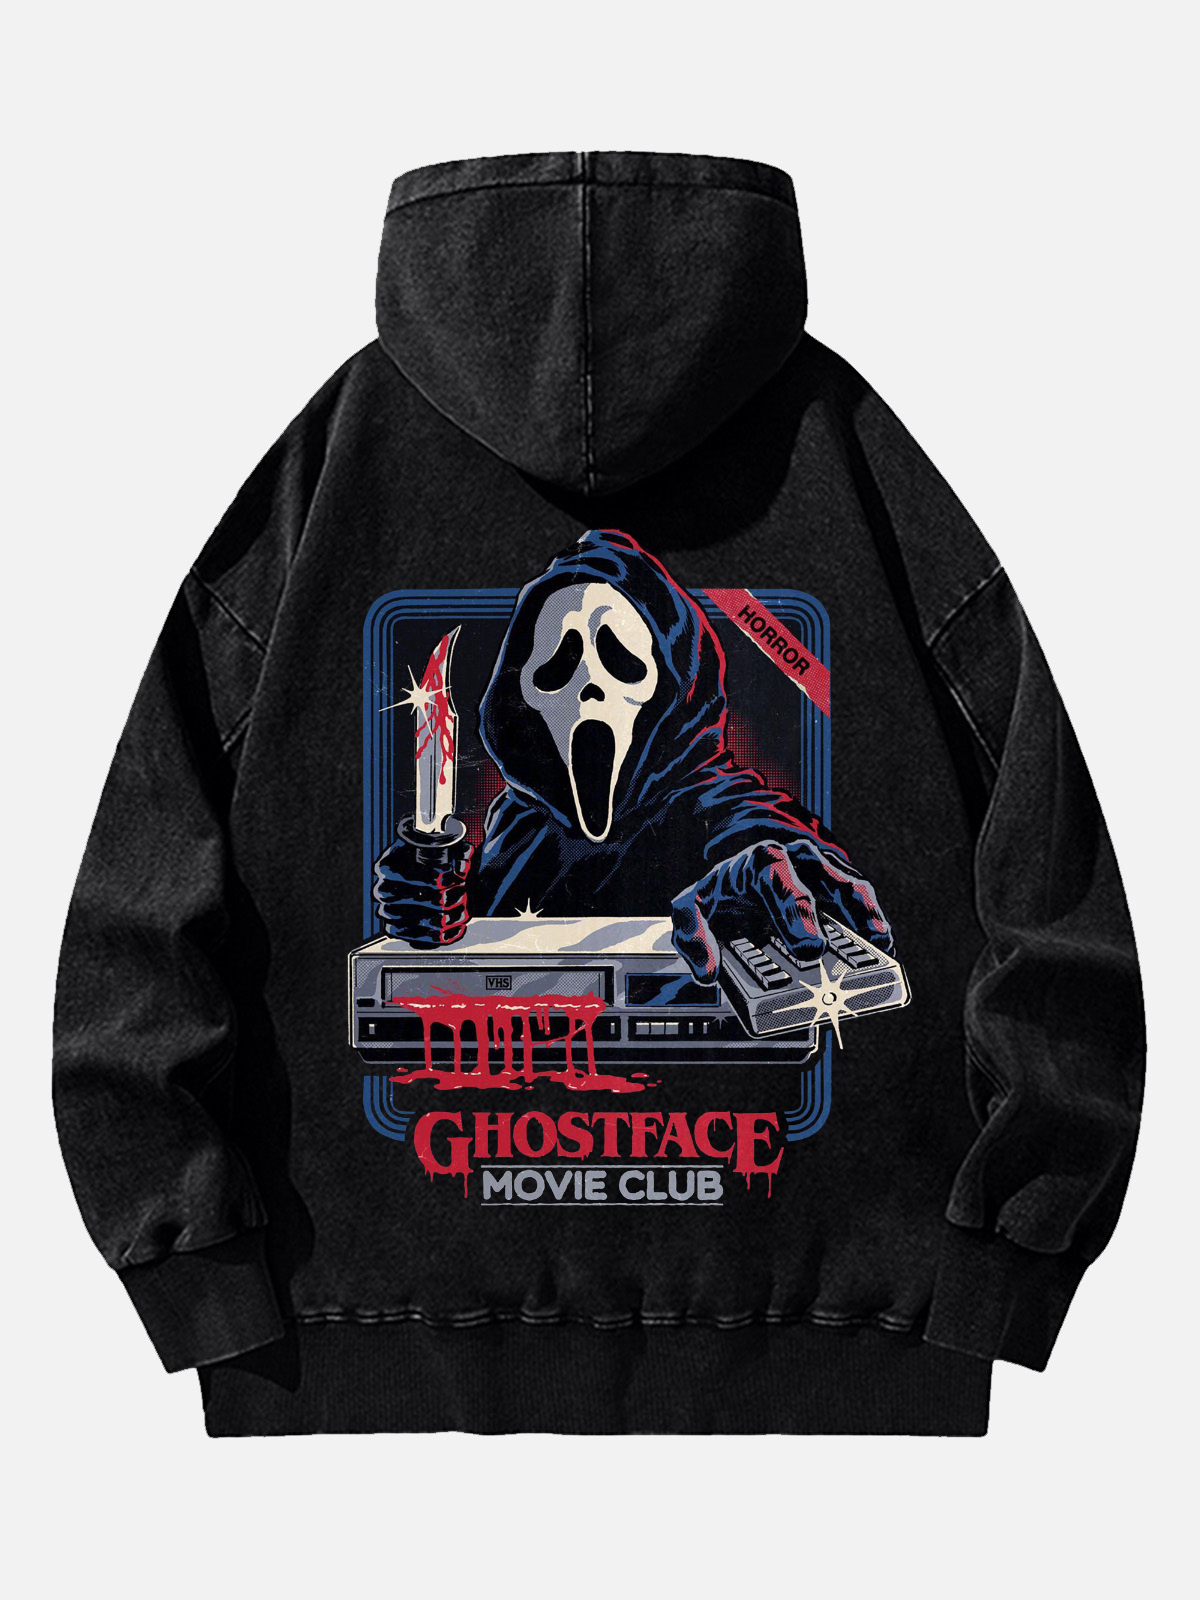 Ghostface Movie Club Unisex Wash Hooded Sweatshirt